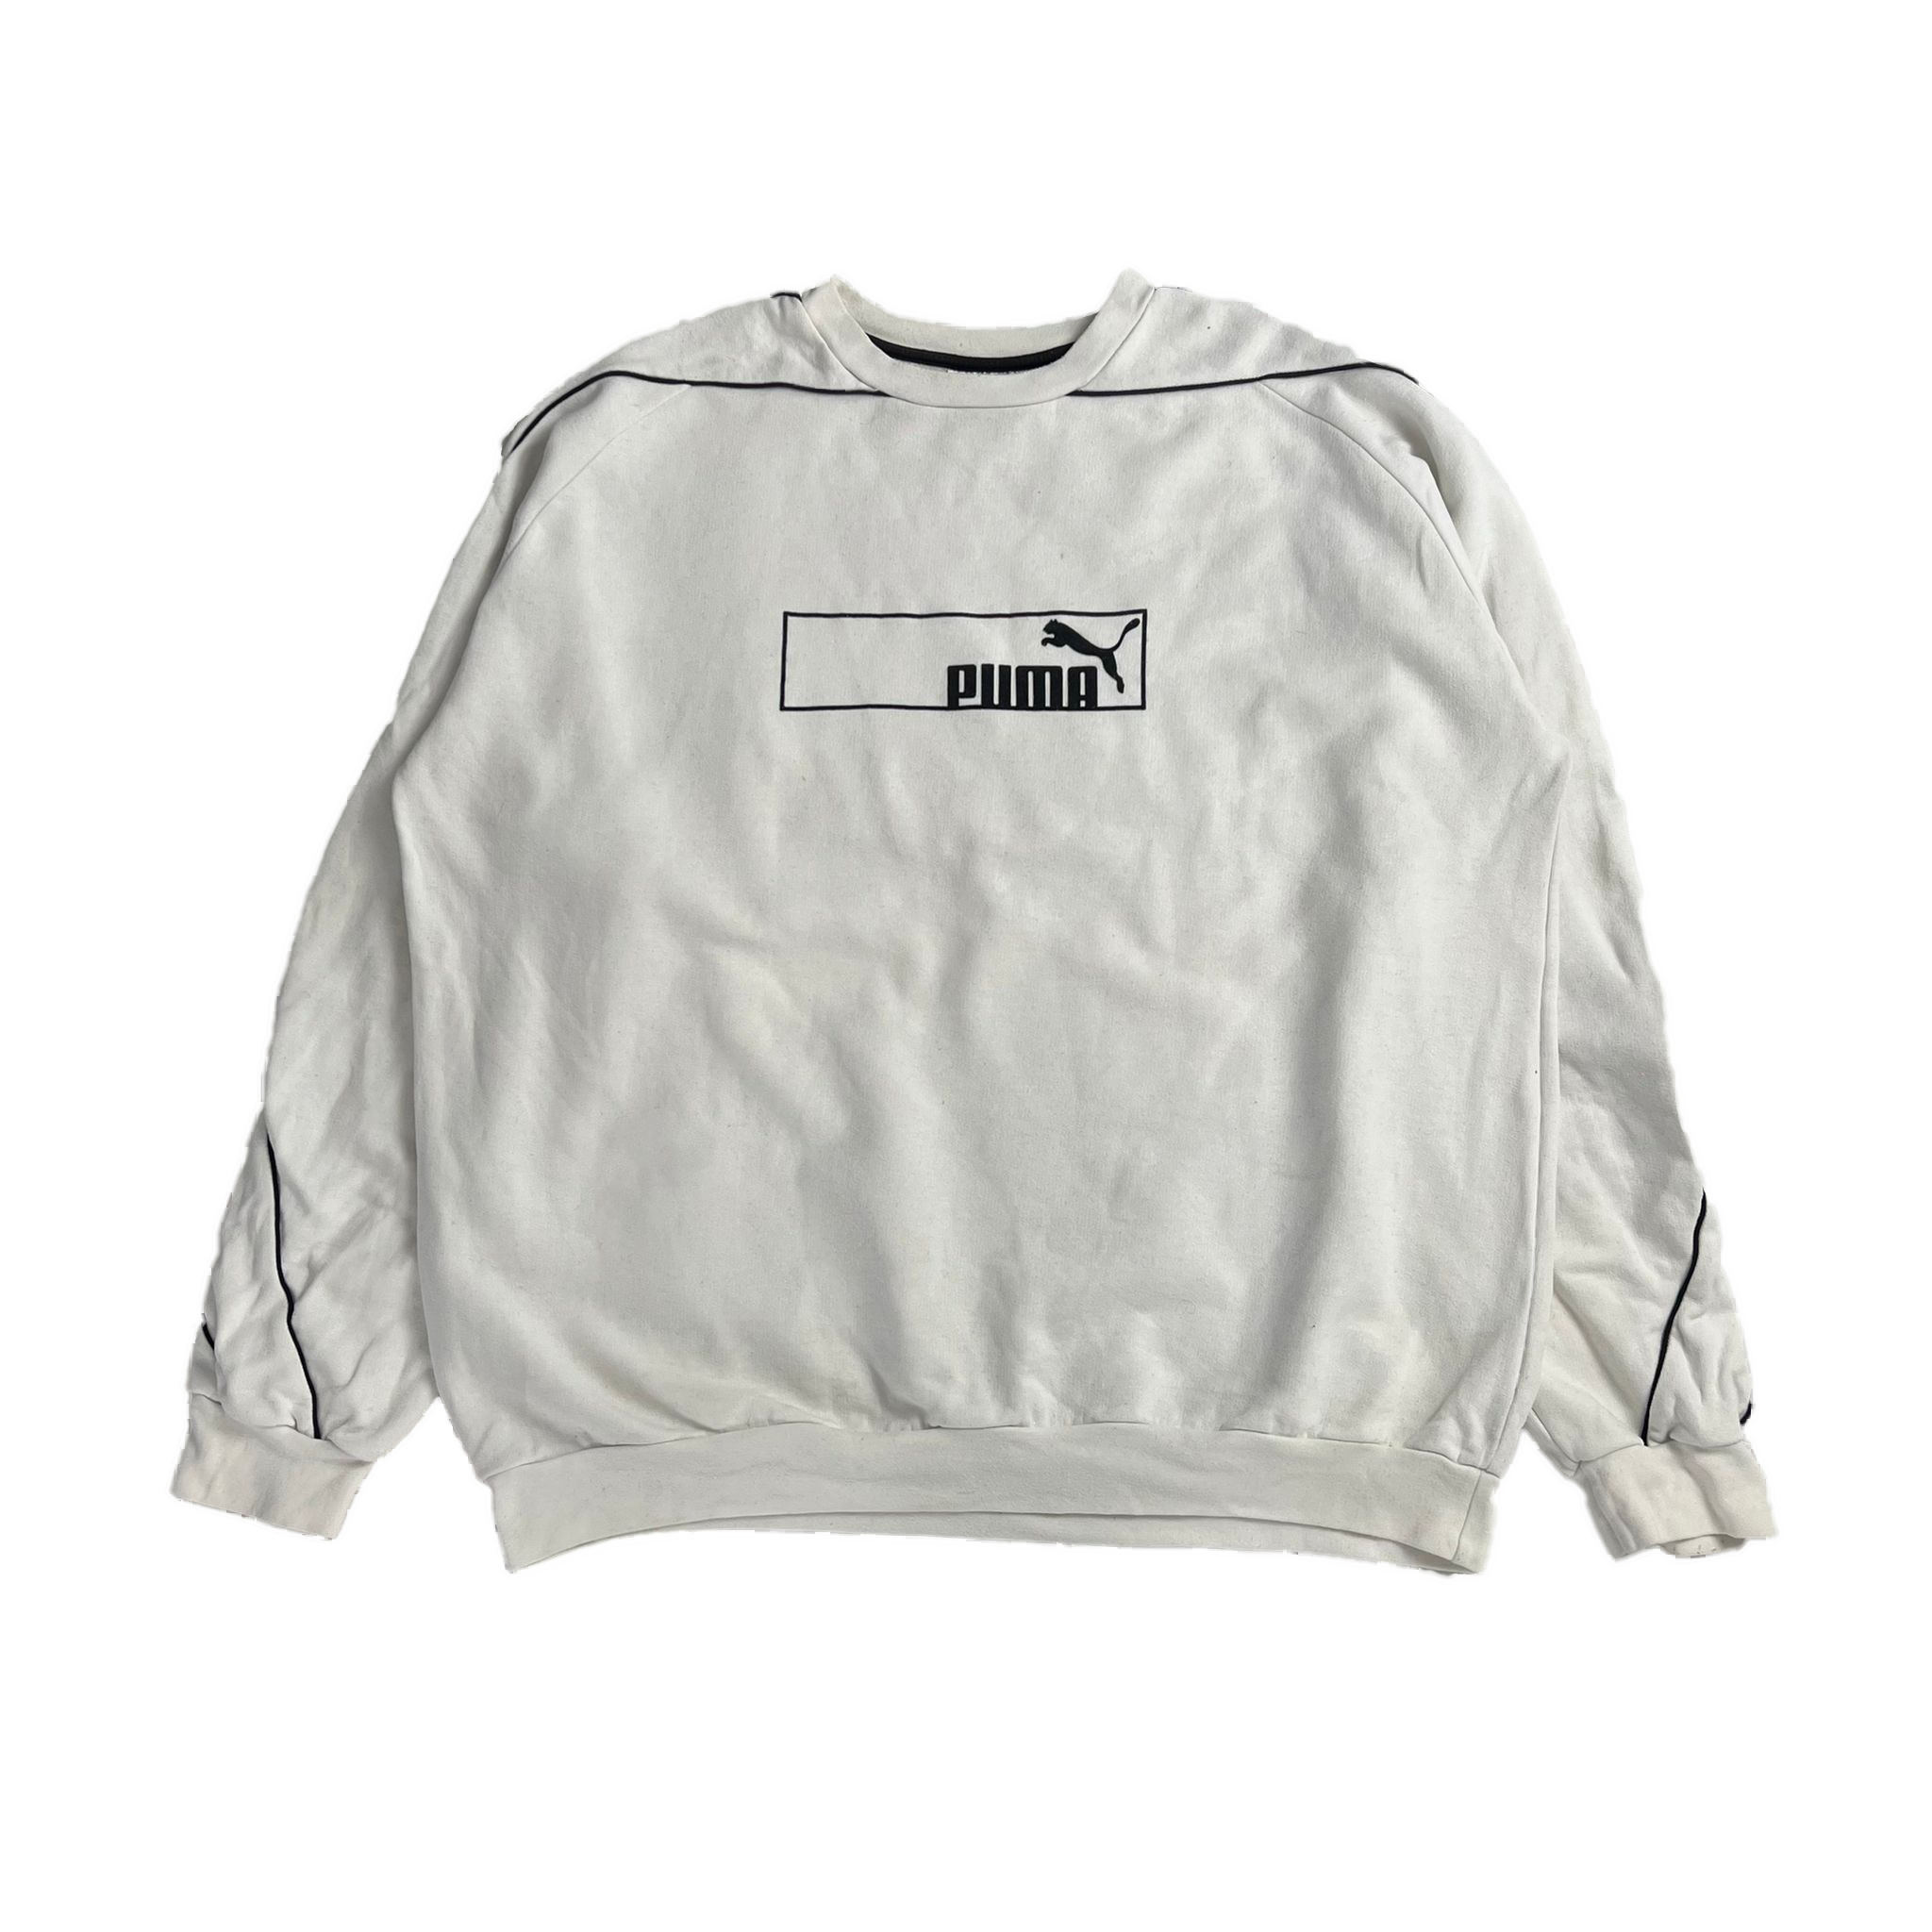 00's Puma sweatshirt